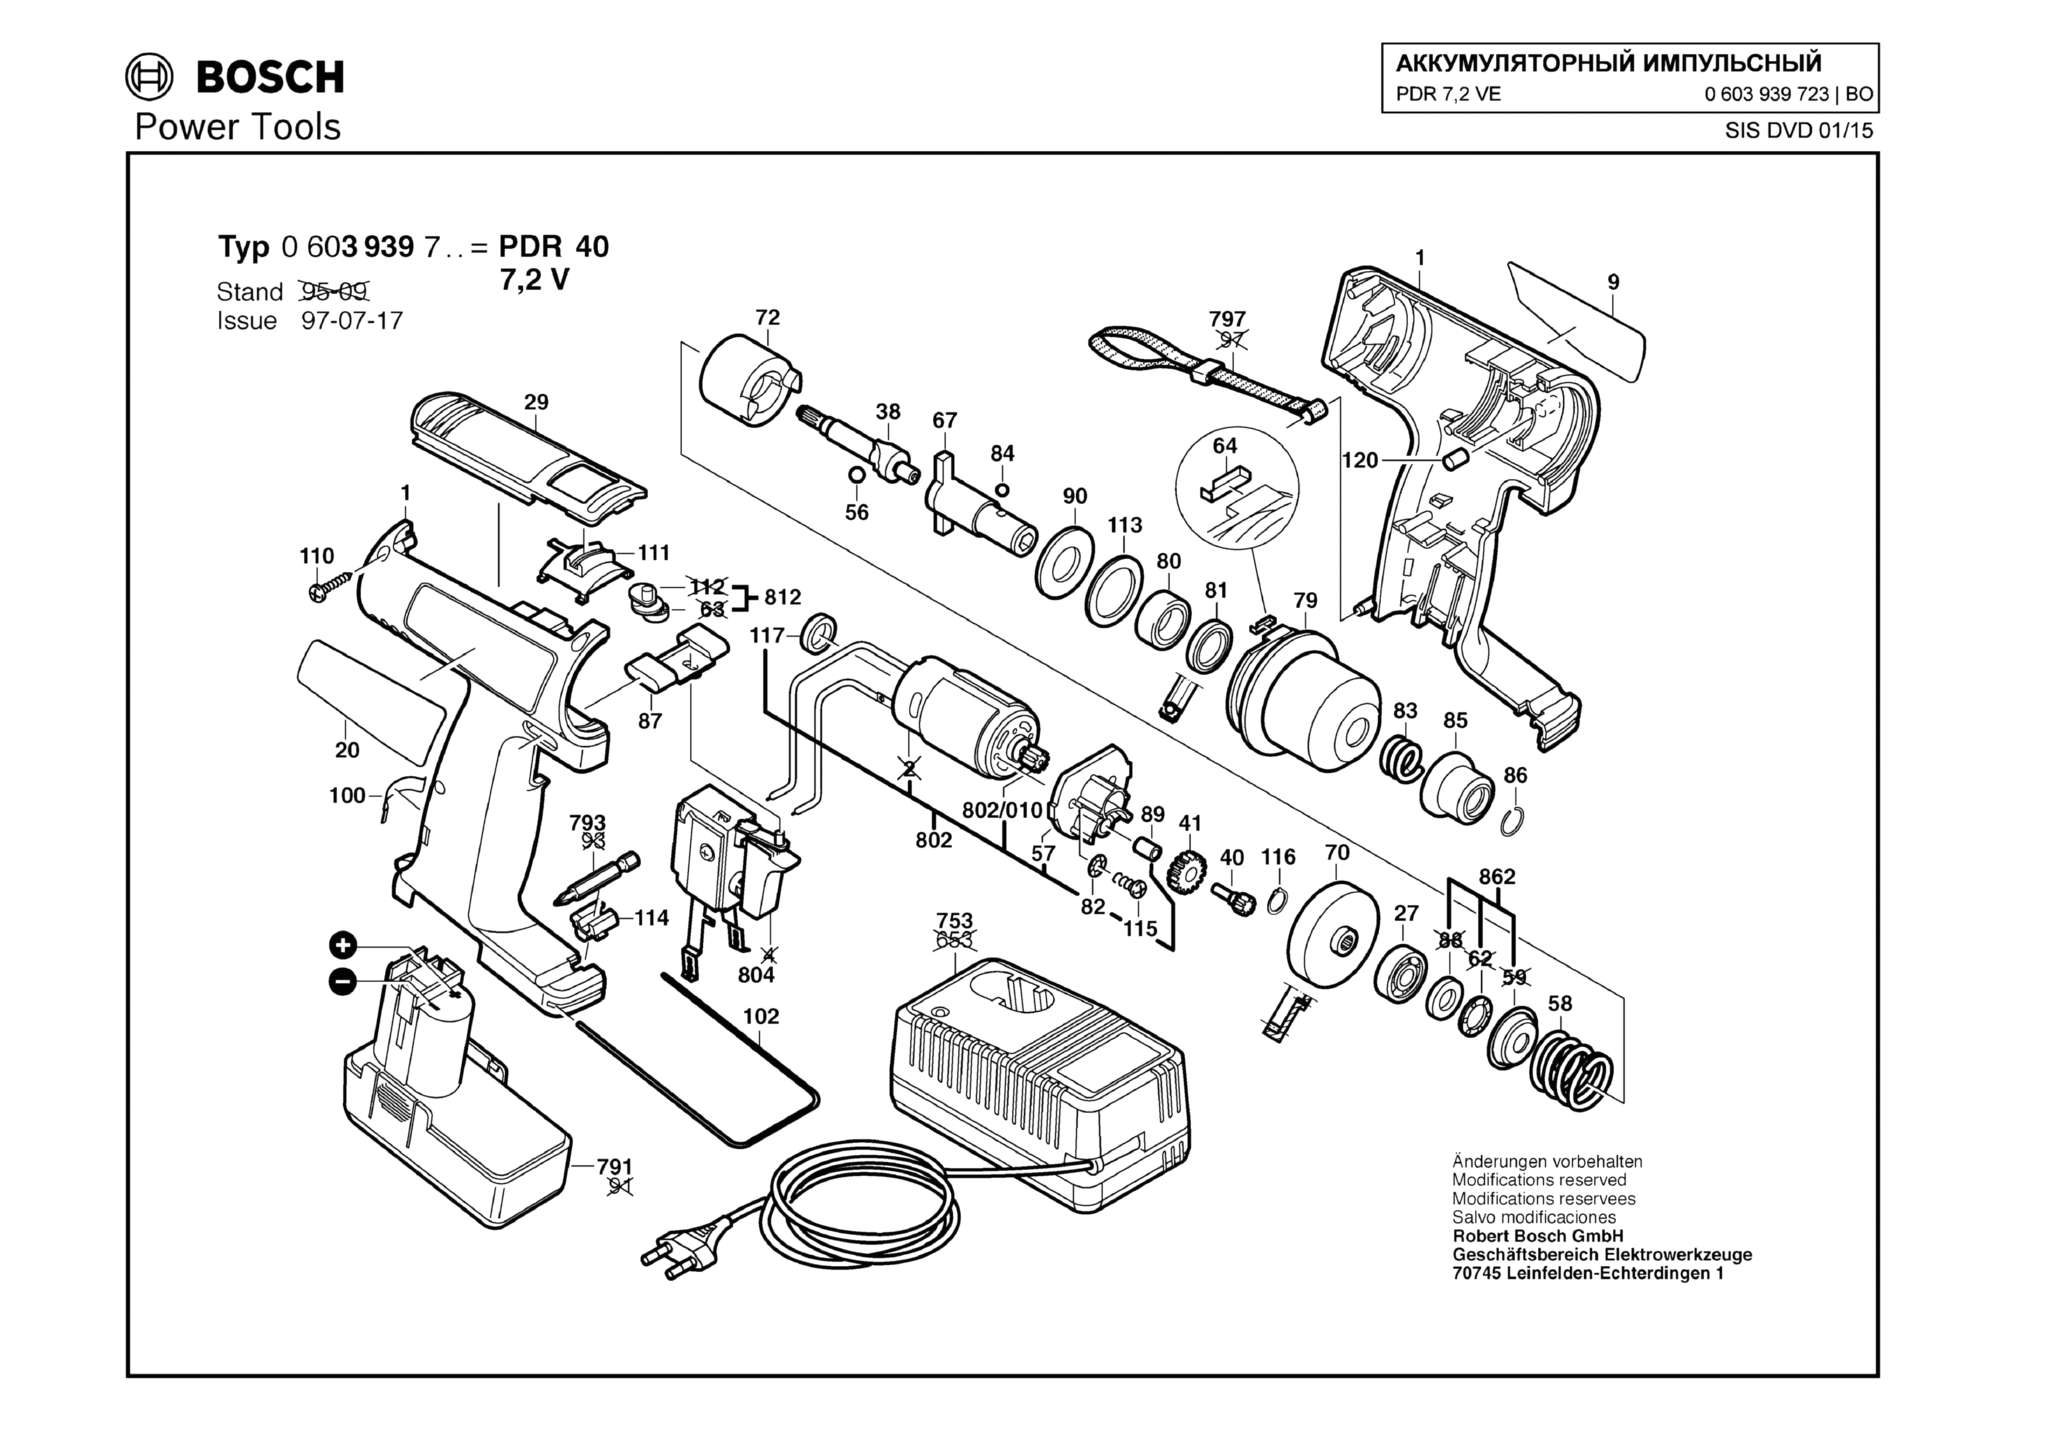 Запчасти, схема и деталировка Bosch PDR 7,2 VE (ТИП 0603939723)